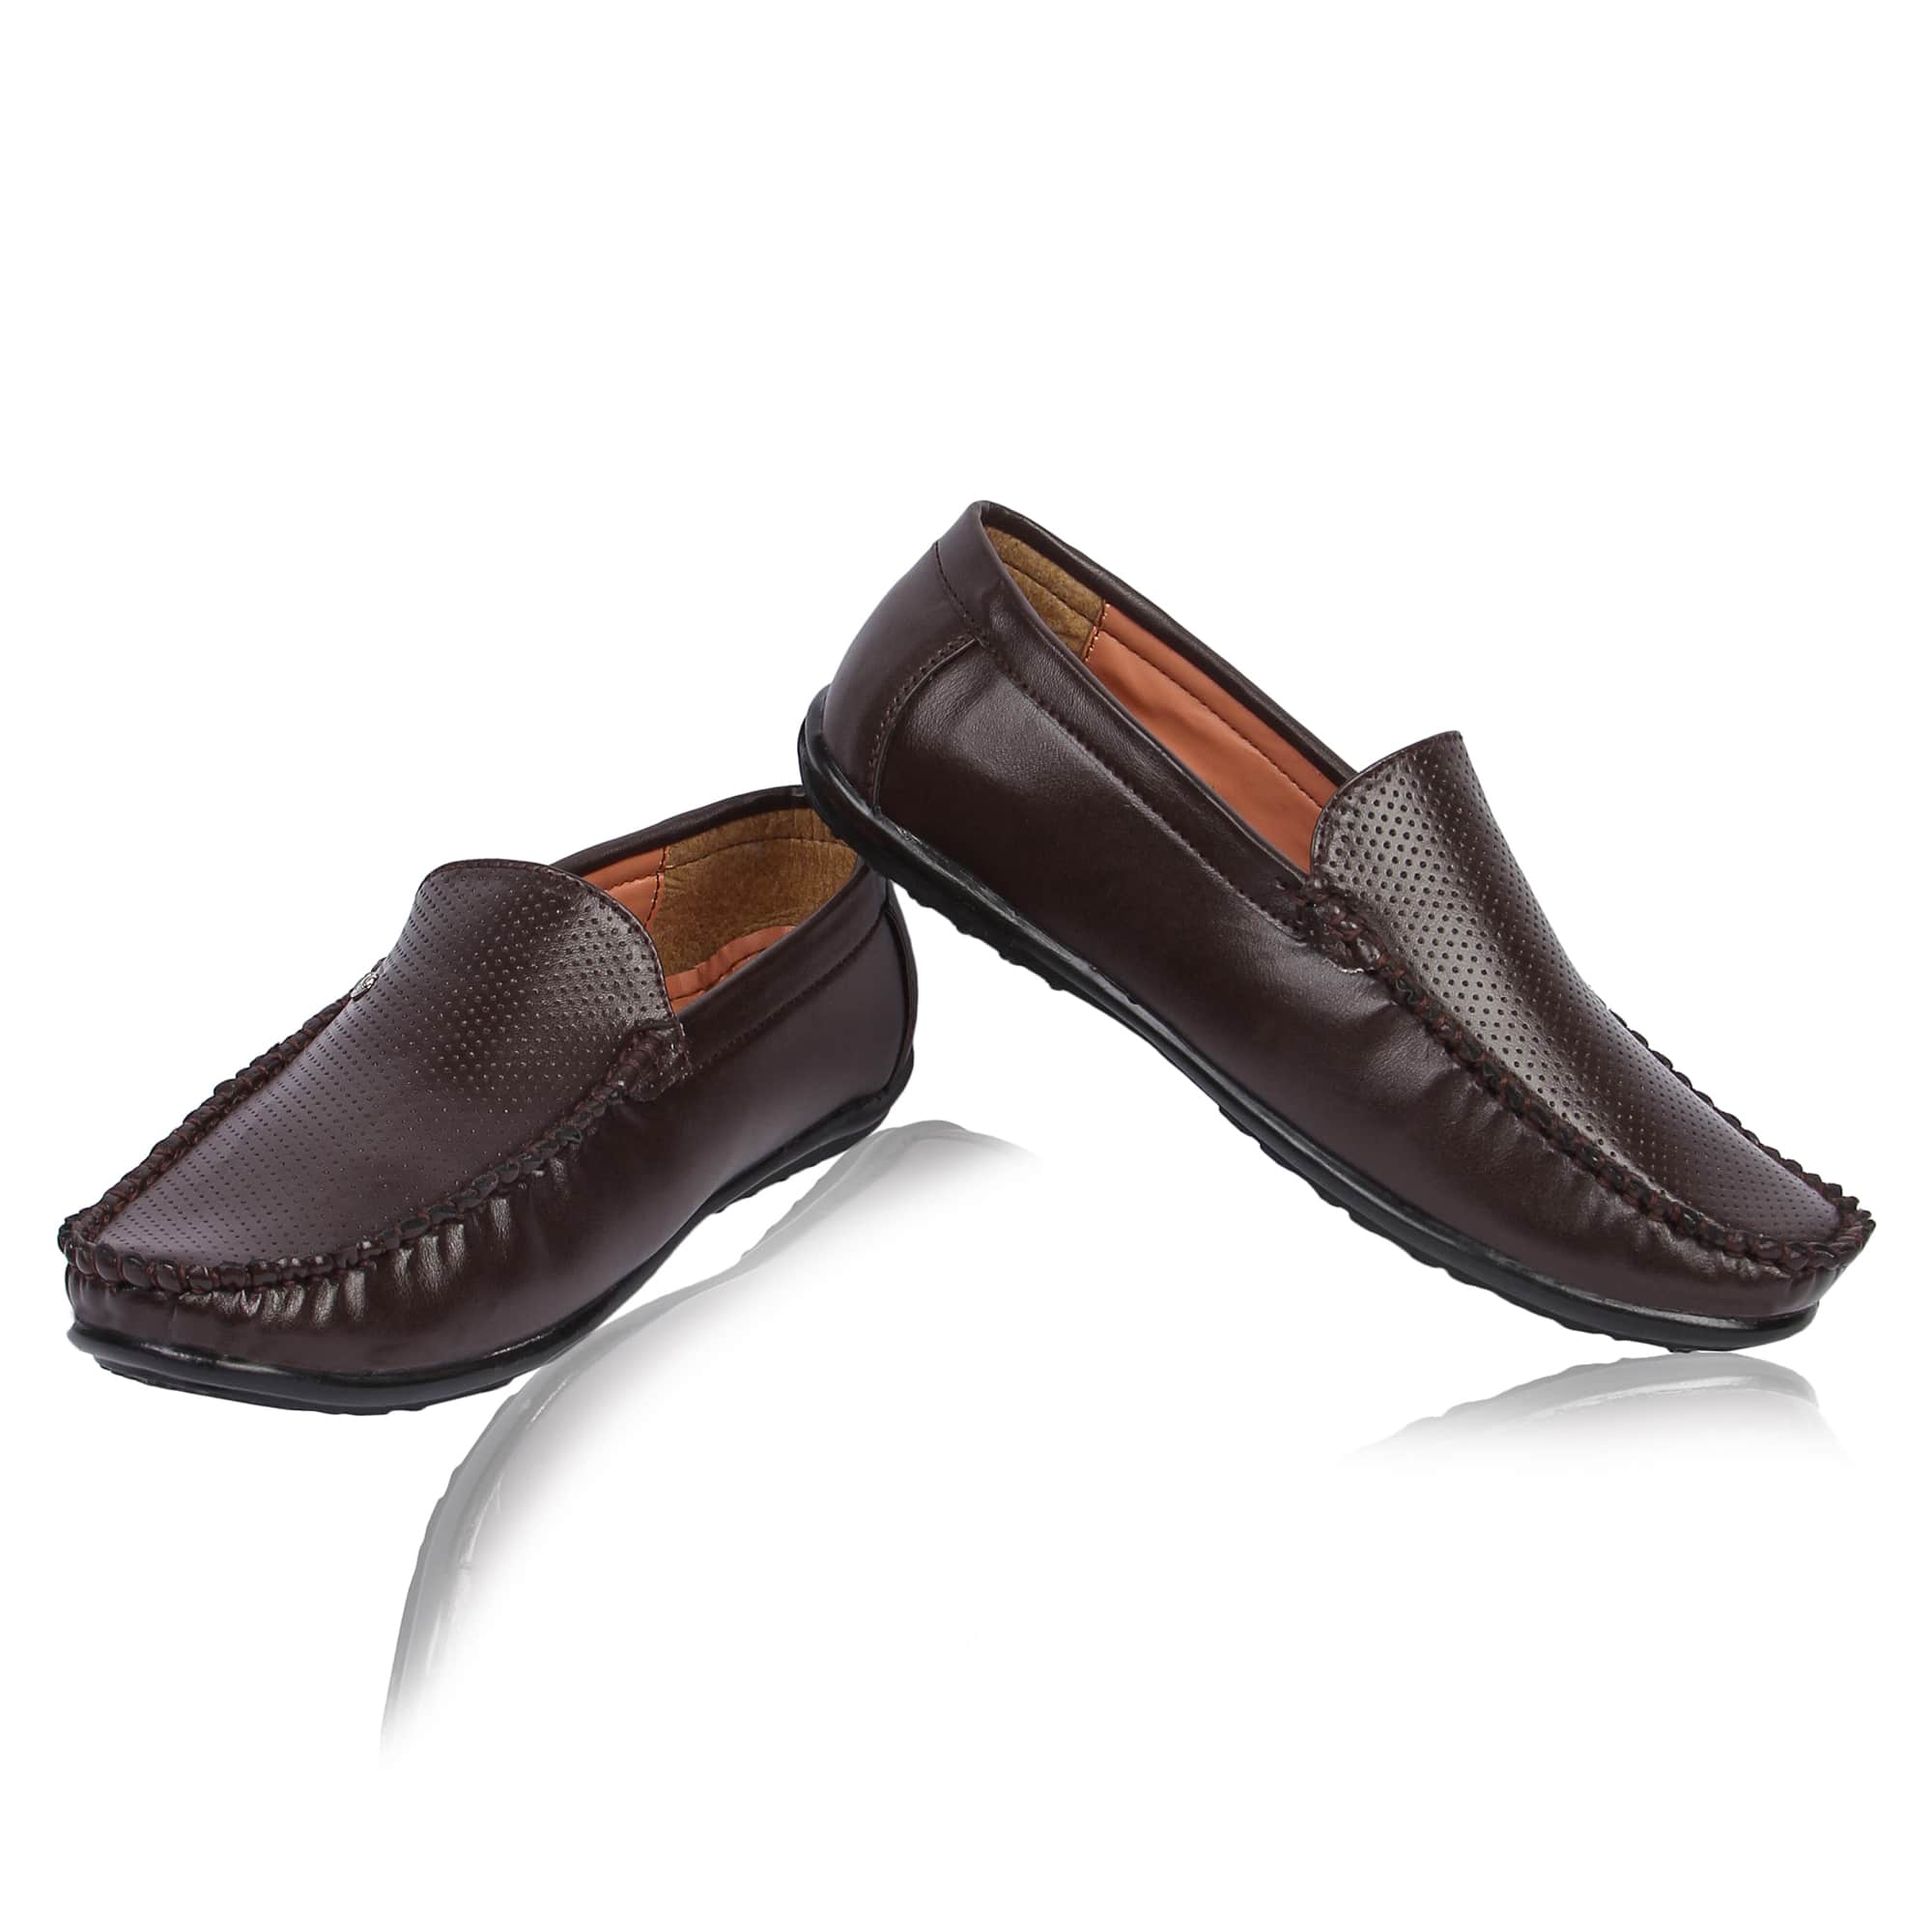 IMG_0206-min | Online Store for Men Footwear in India